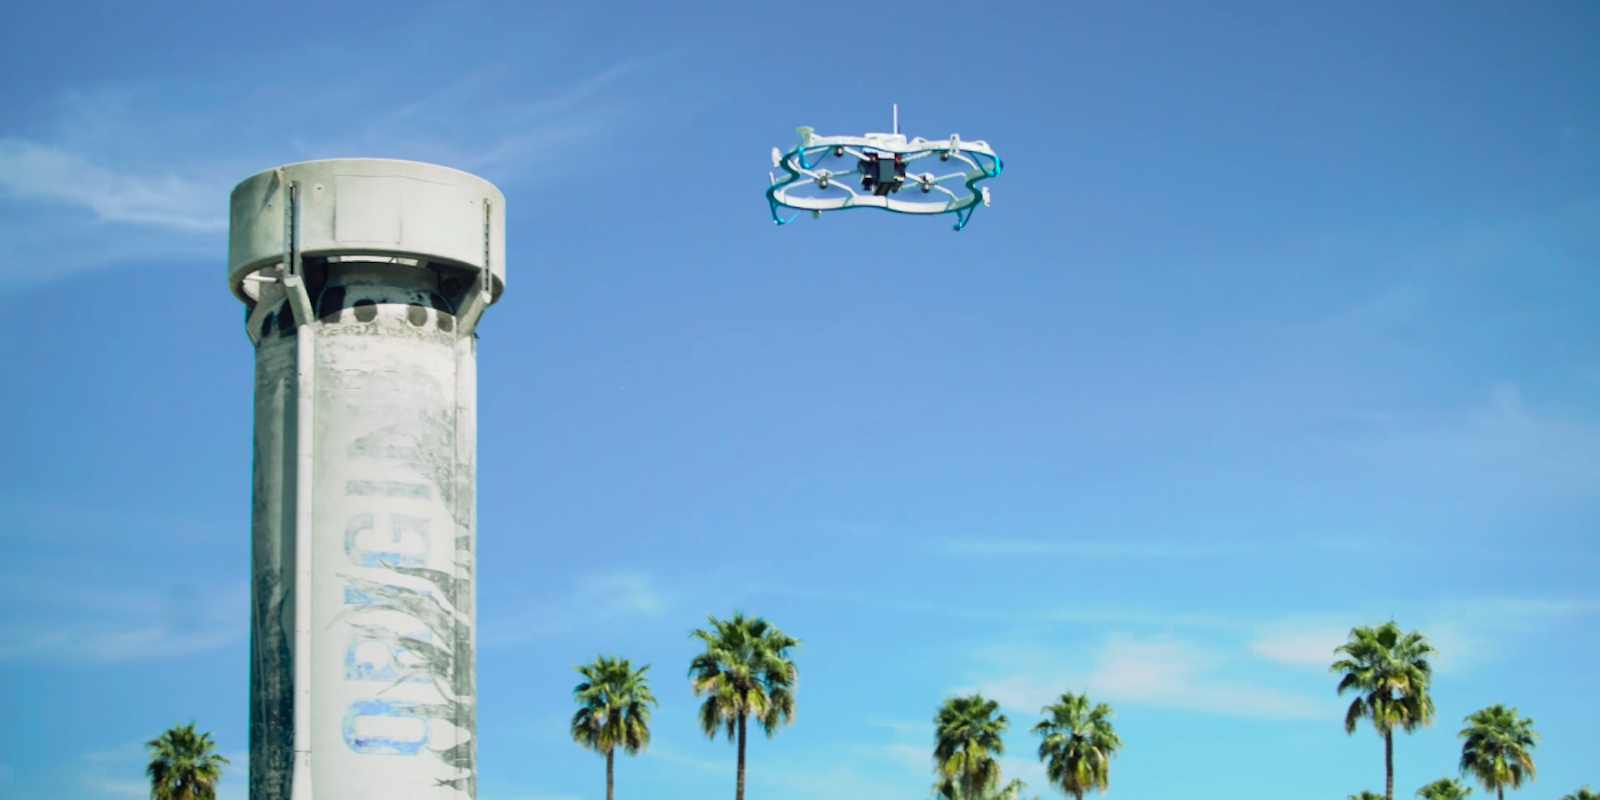 Amazon drone flying in blue sky